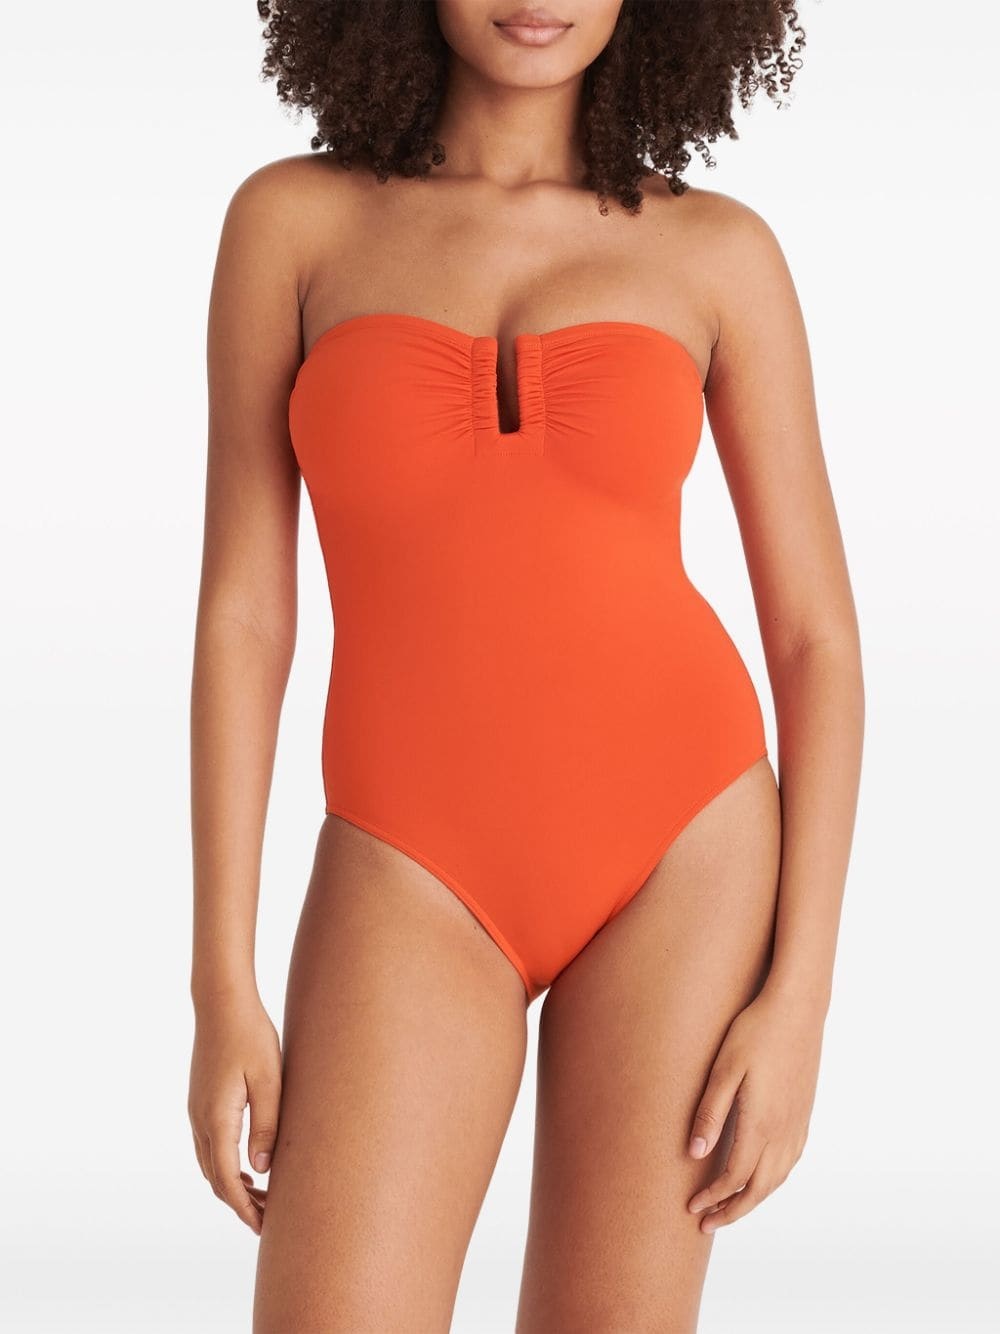 CassiopÃ©e strapless swimsuit - 4